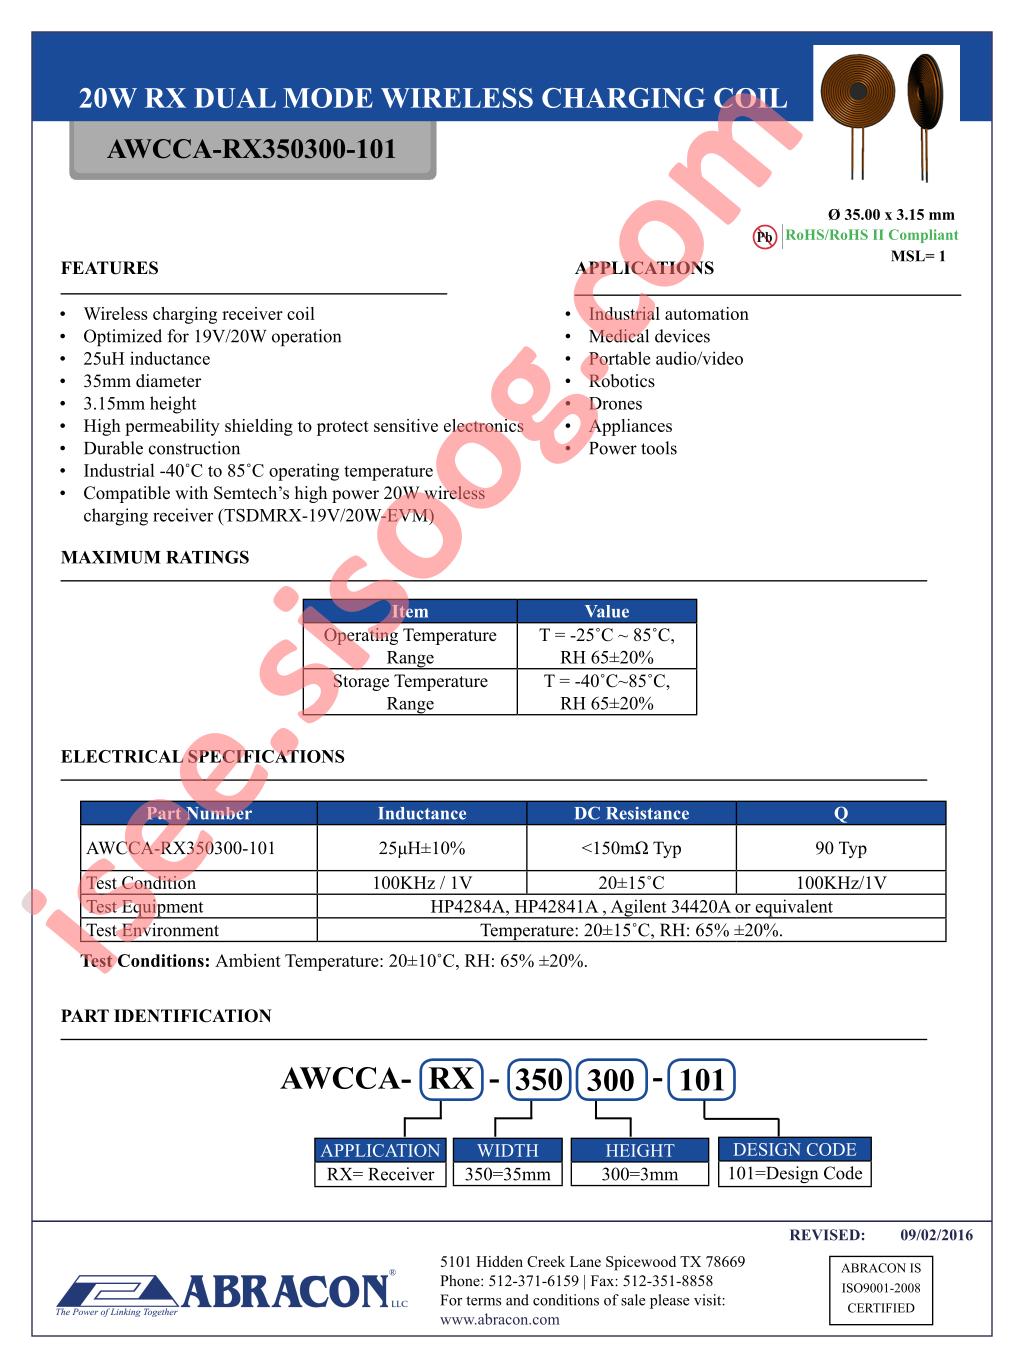 AWCCA-RX-350300-101